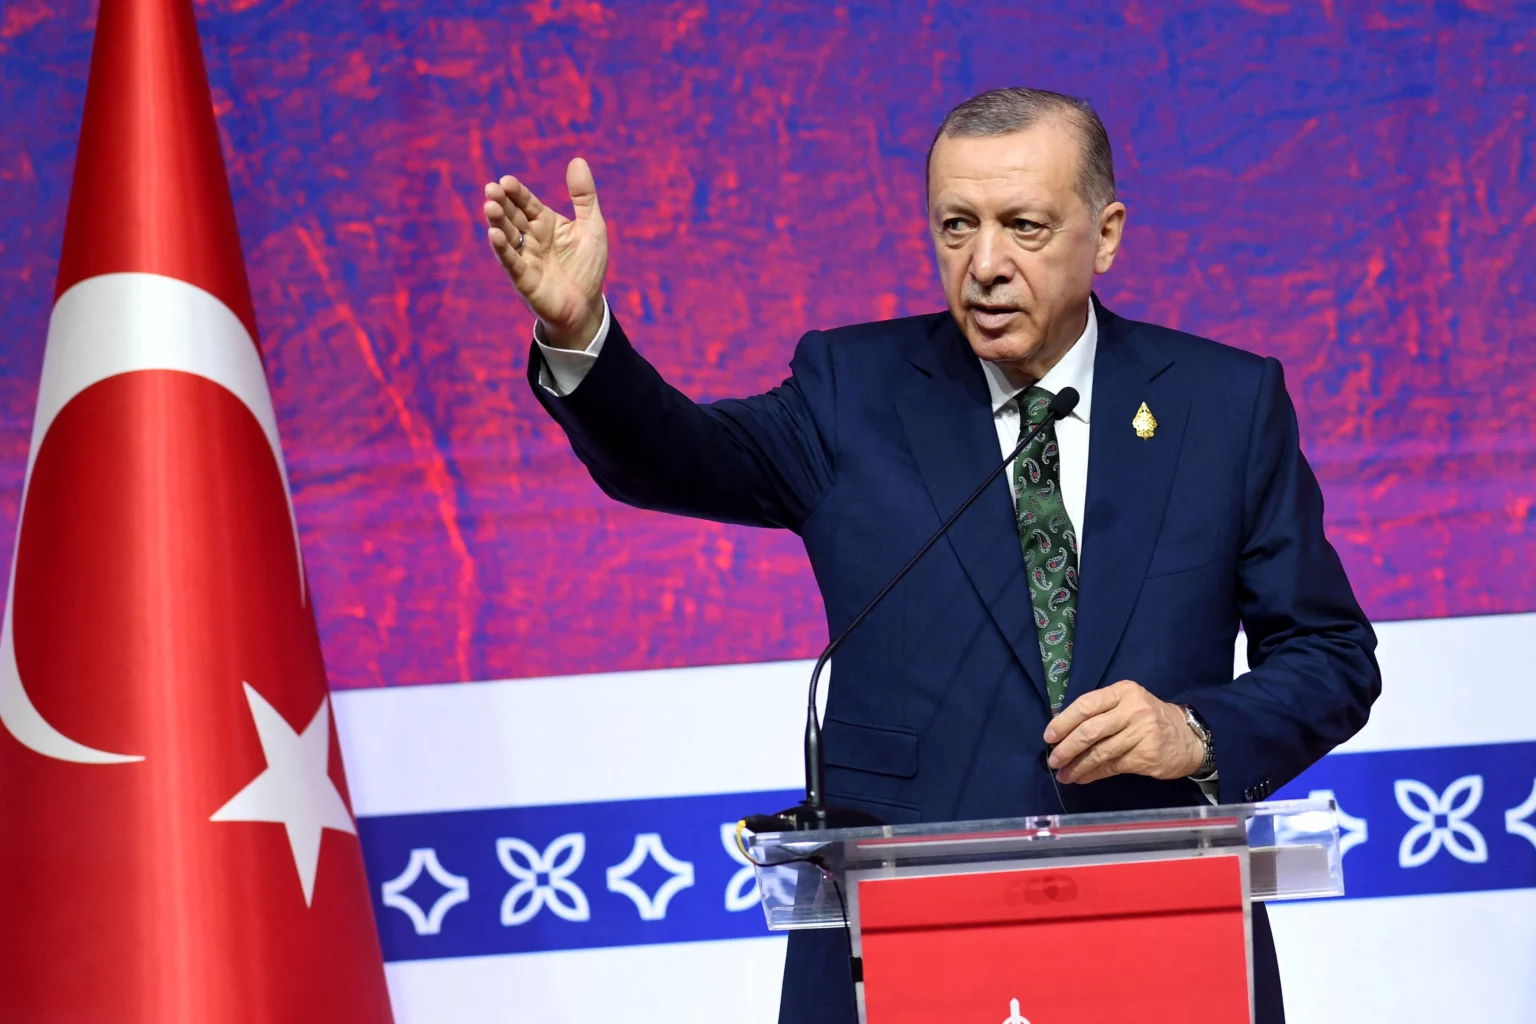 turkeys-president-erdogan-labels-israeli-pm-netanyahu-a-butcher-of-gaza-and-accuses-him-of-spawning-anti-semitism